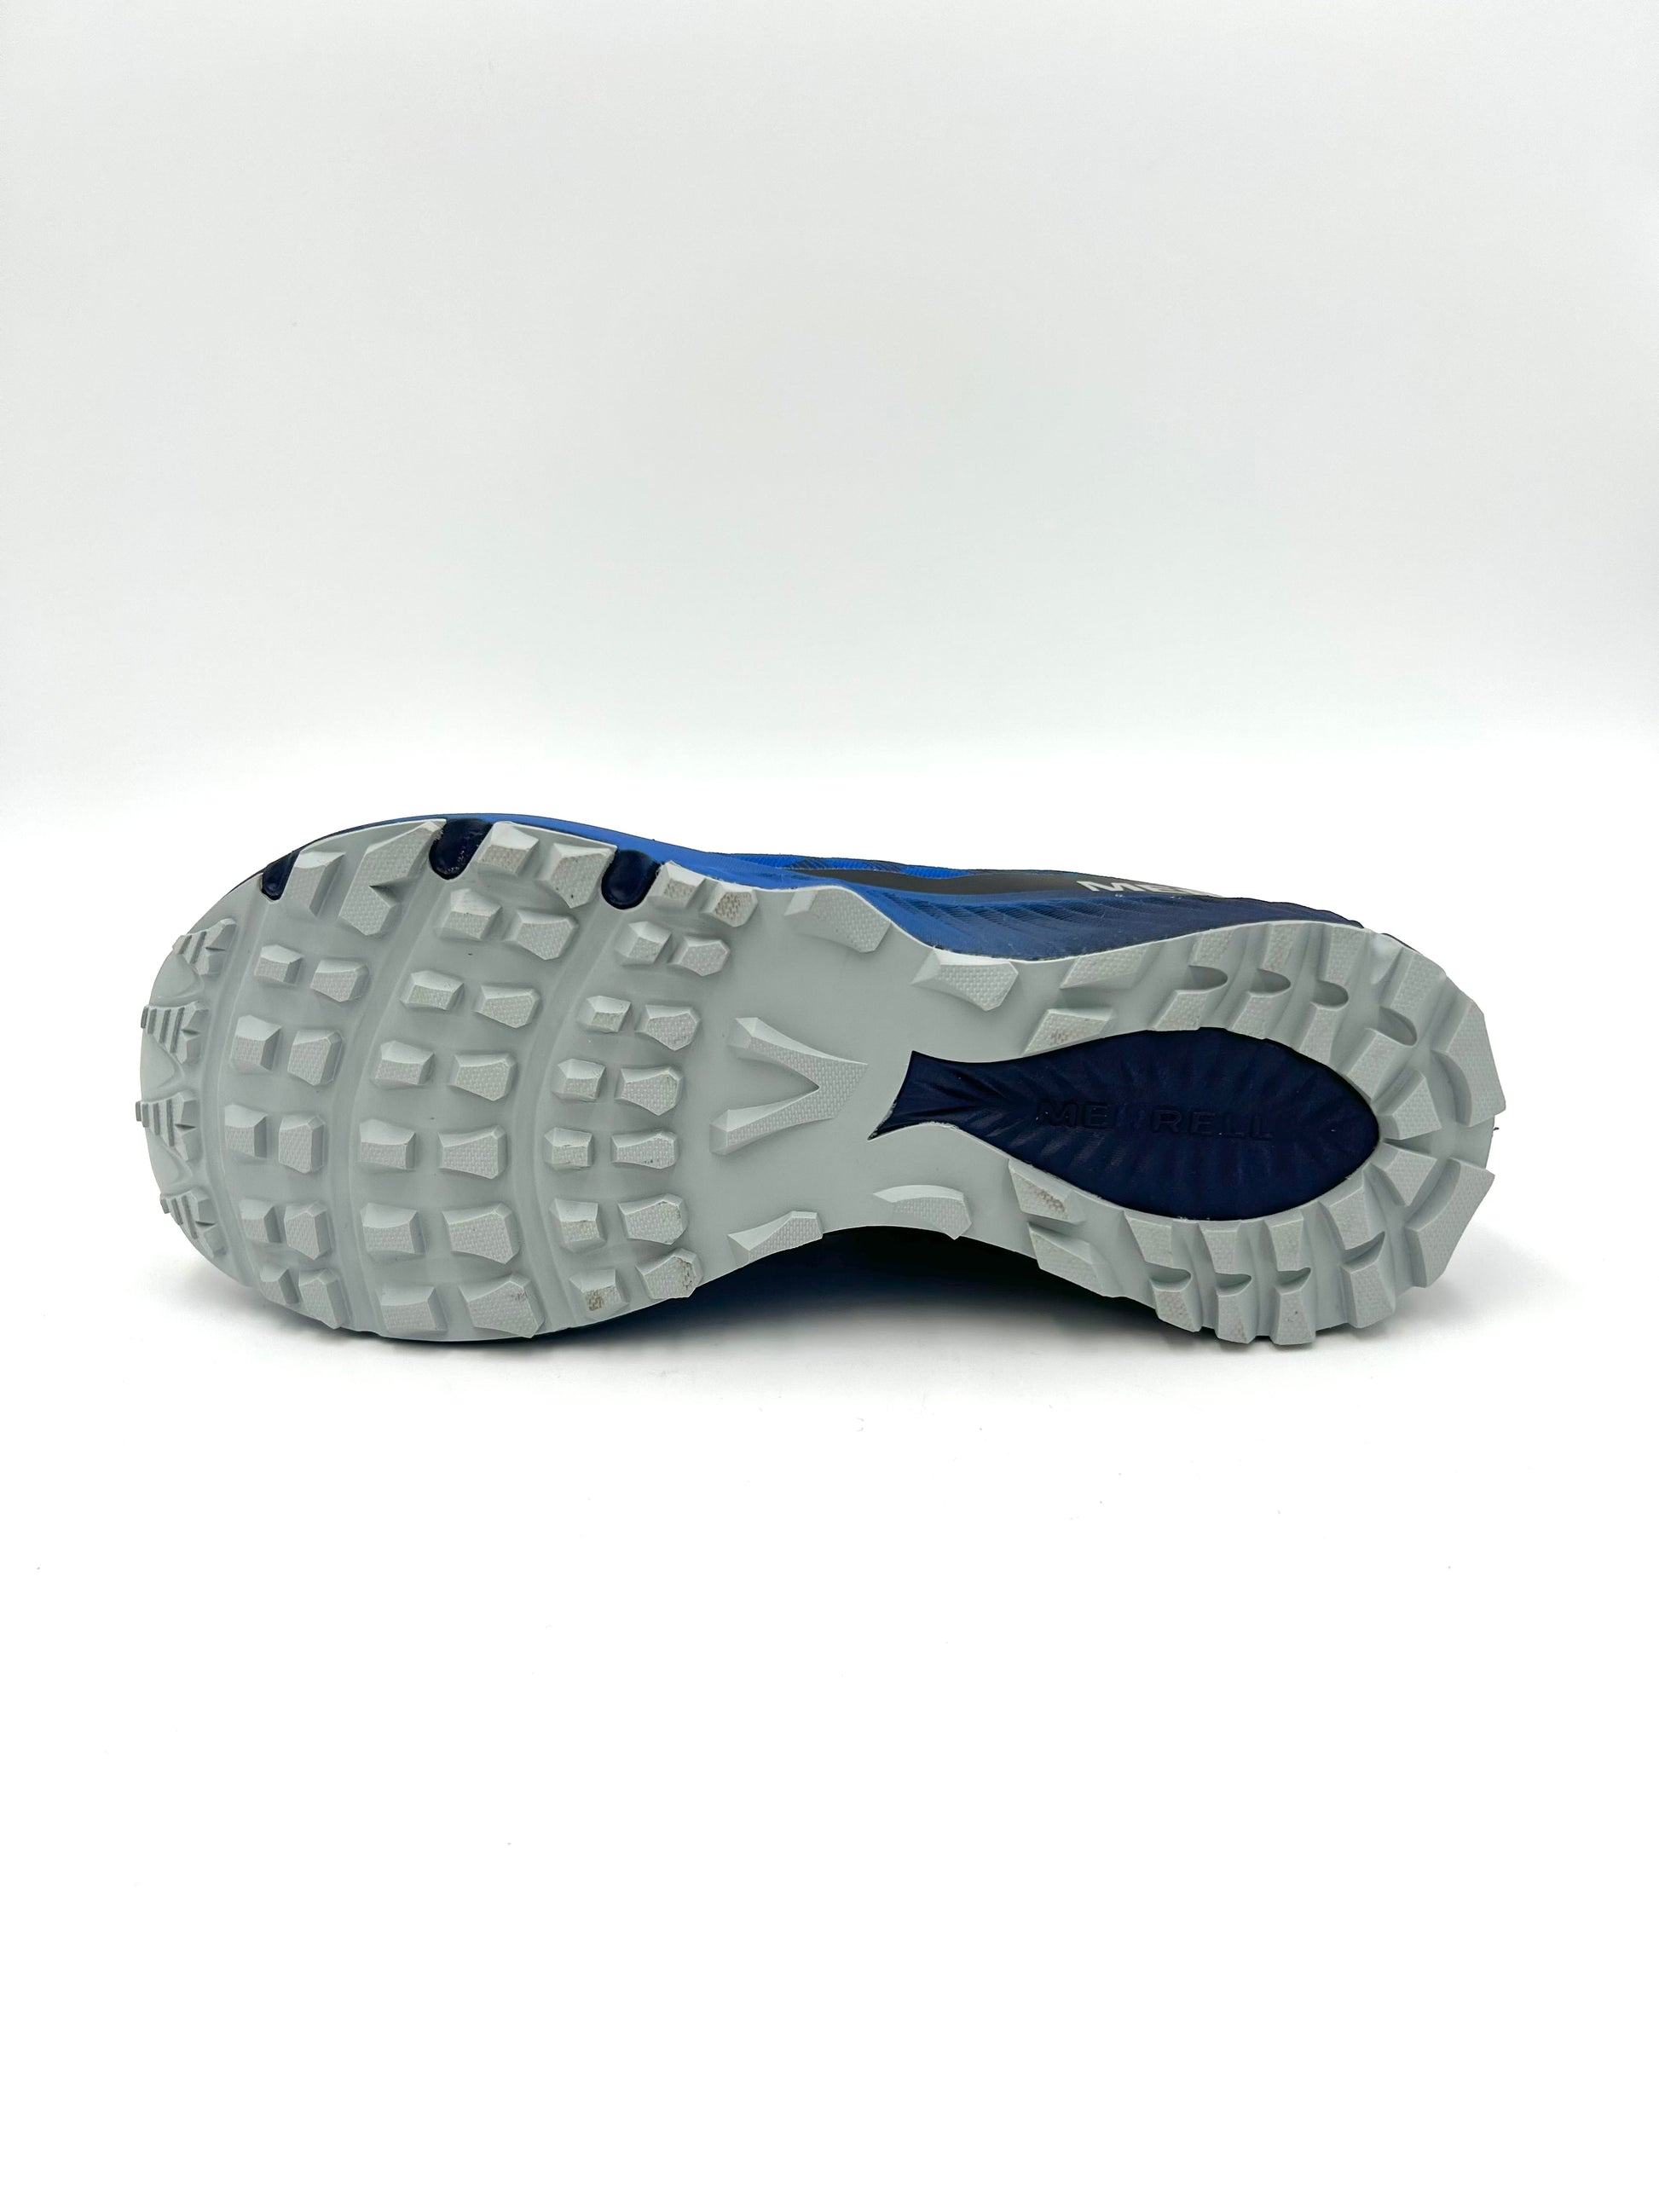 Merrell Sneakers Training Hyperlock - blue and black - Sebastiano Calzature